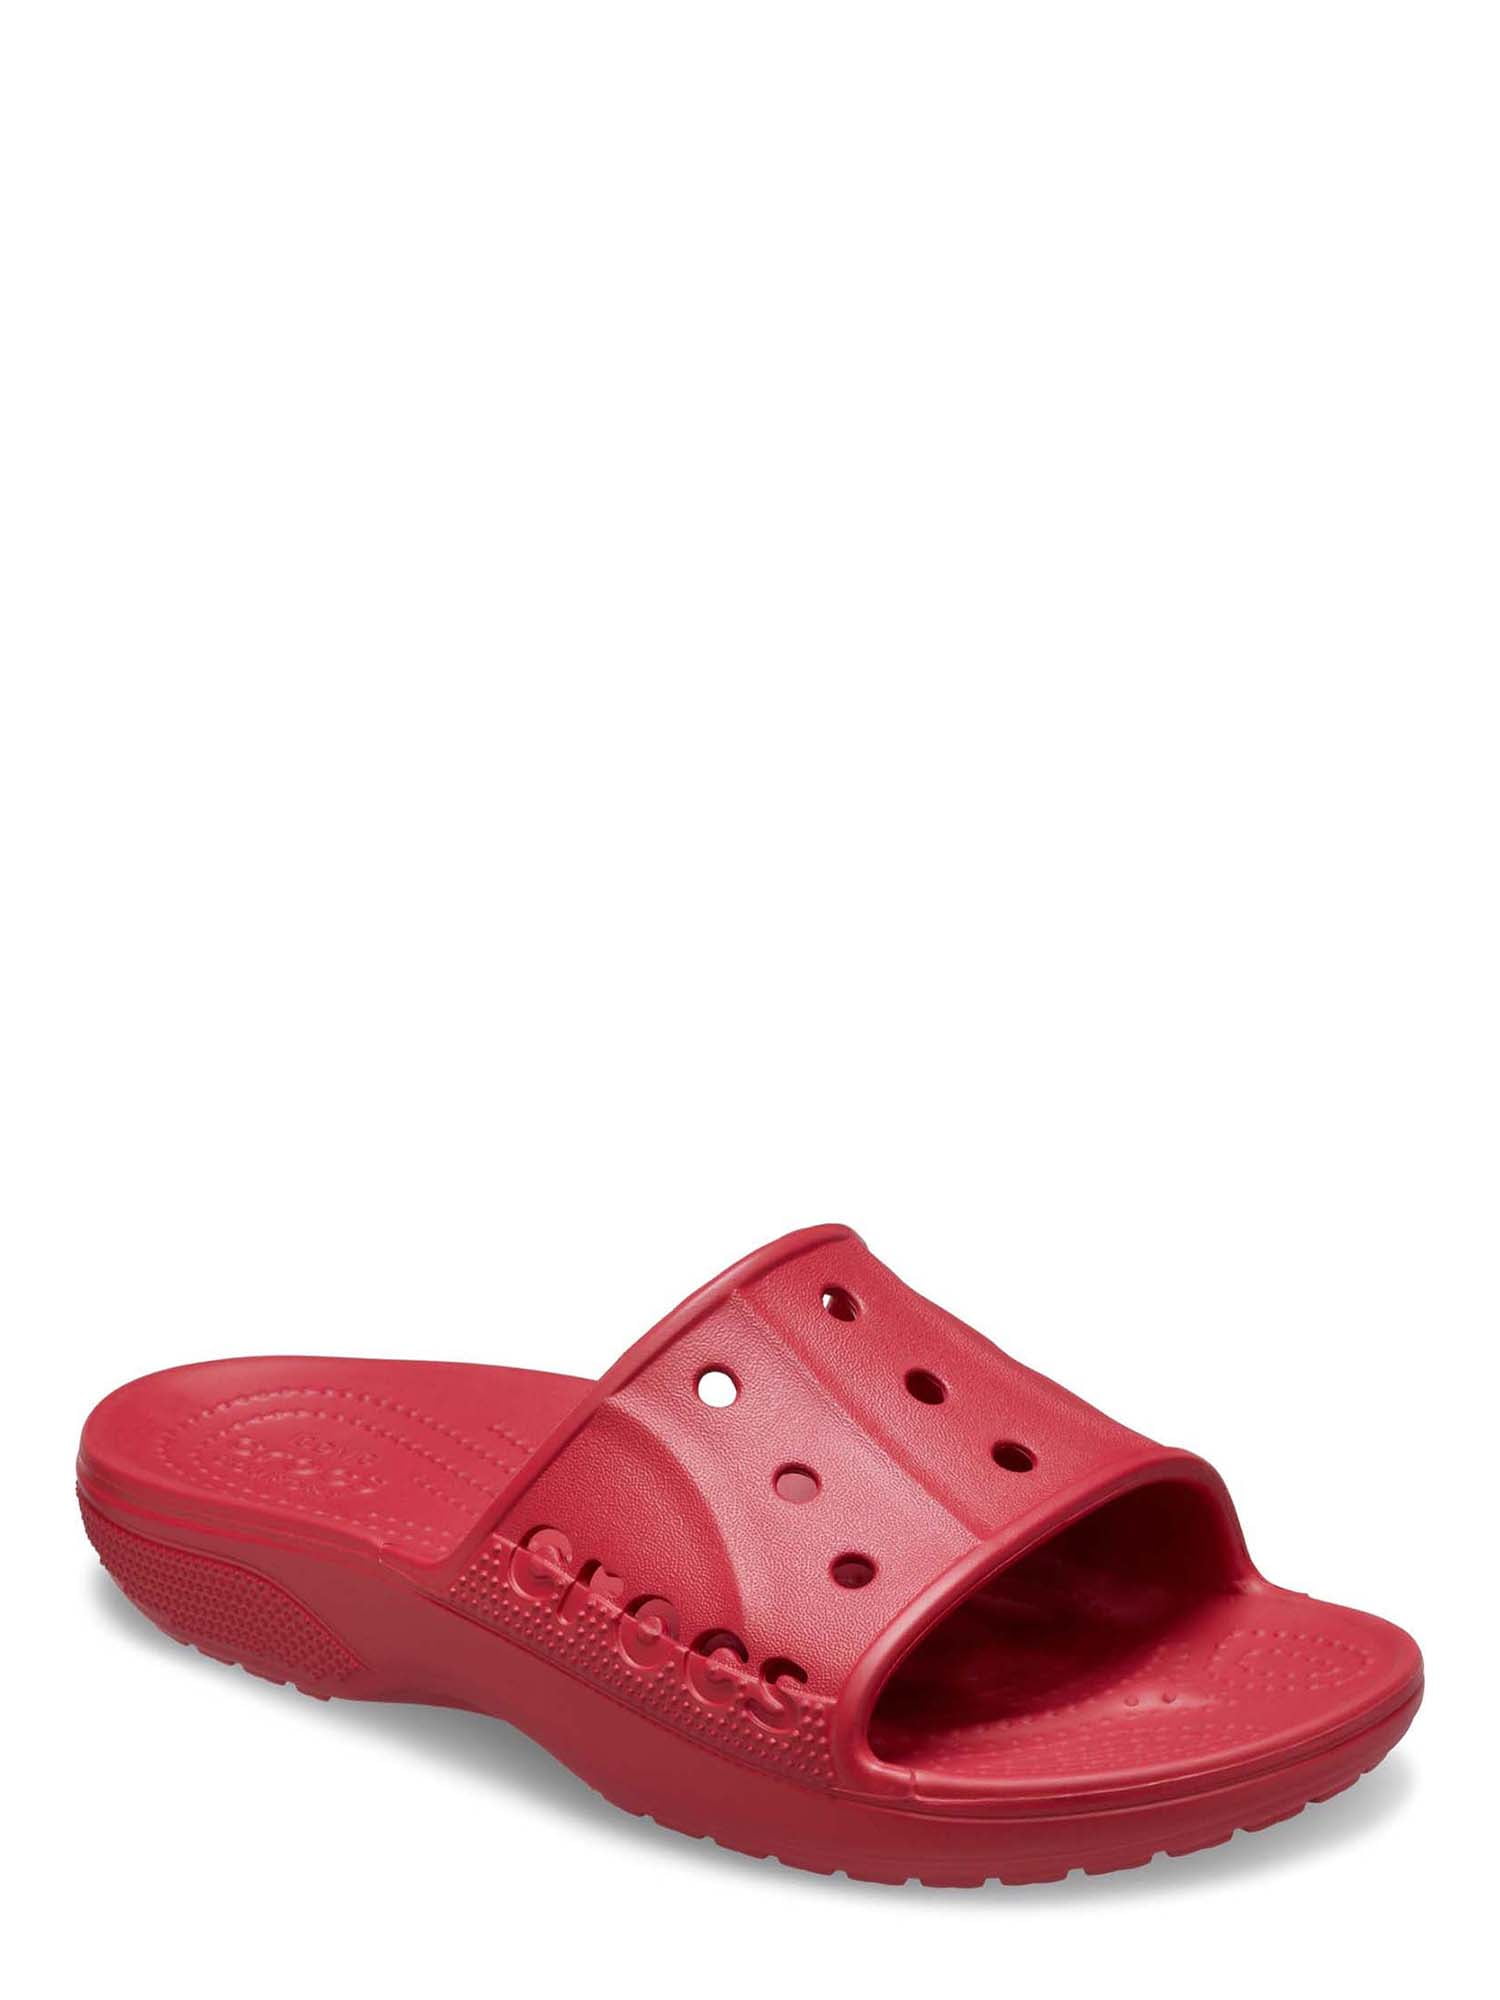 Crocs Unisex Baya II Slide Sandals - Walmart.com